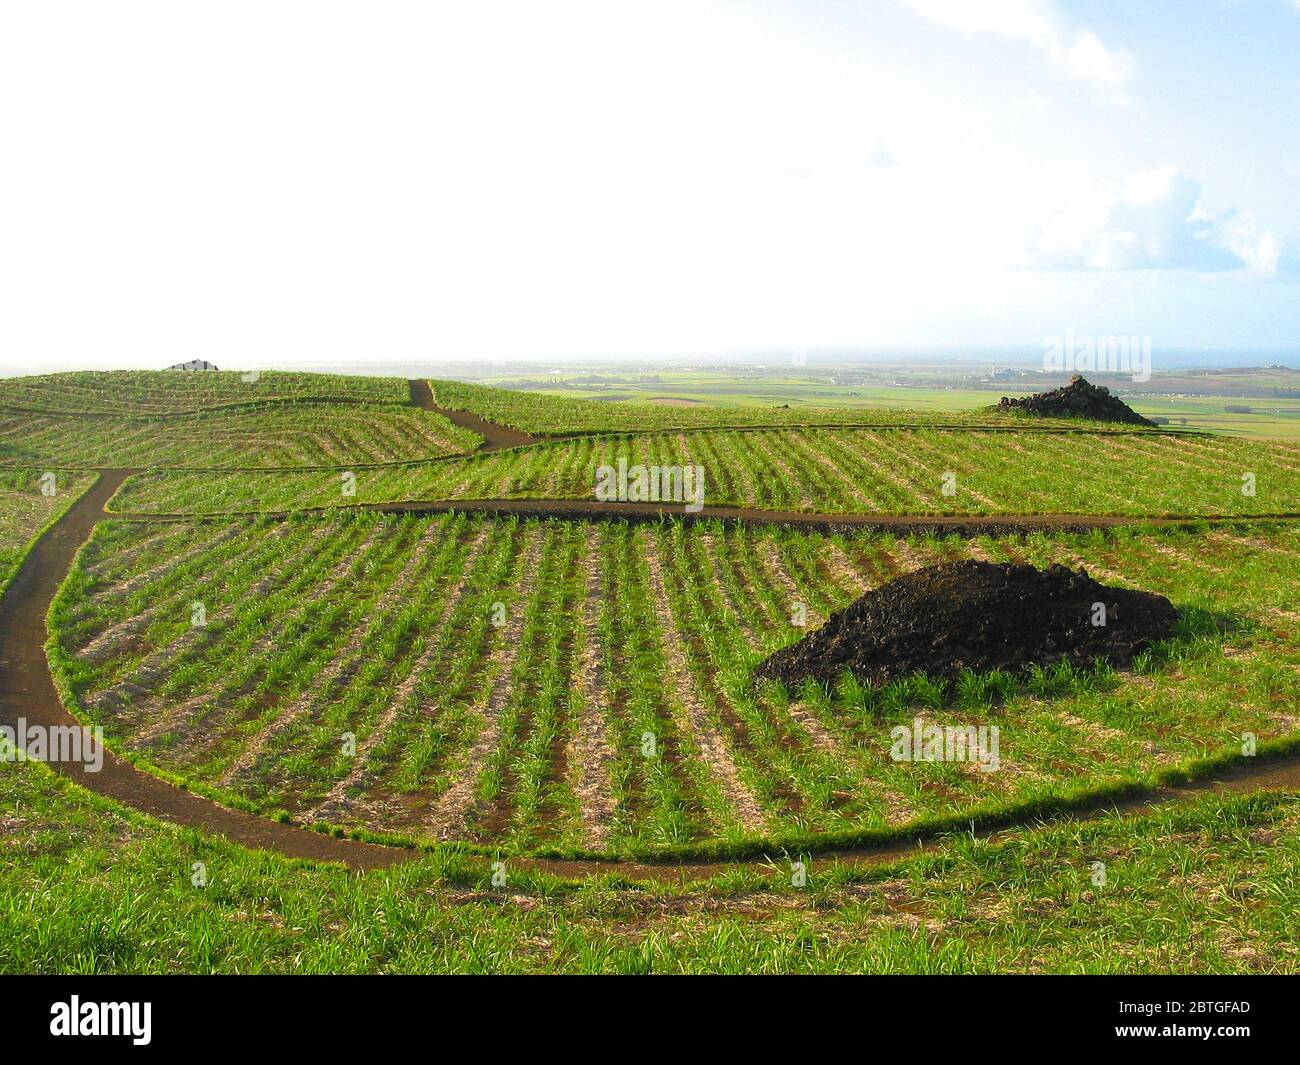 Sugar cane plantation with stone pyramids, Mauritius Island, Mauritius and Rodrigues, Indian Ocean. Stock Photo